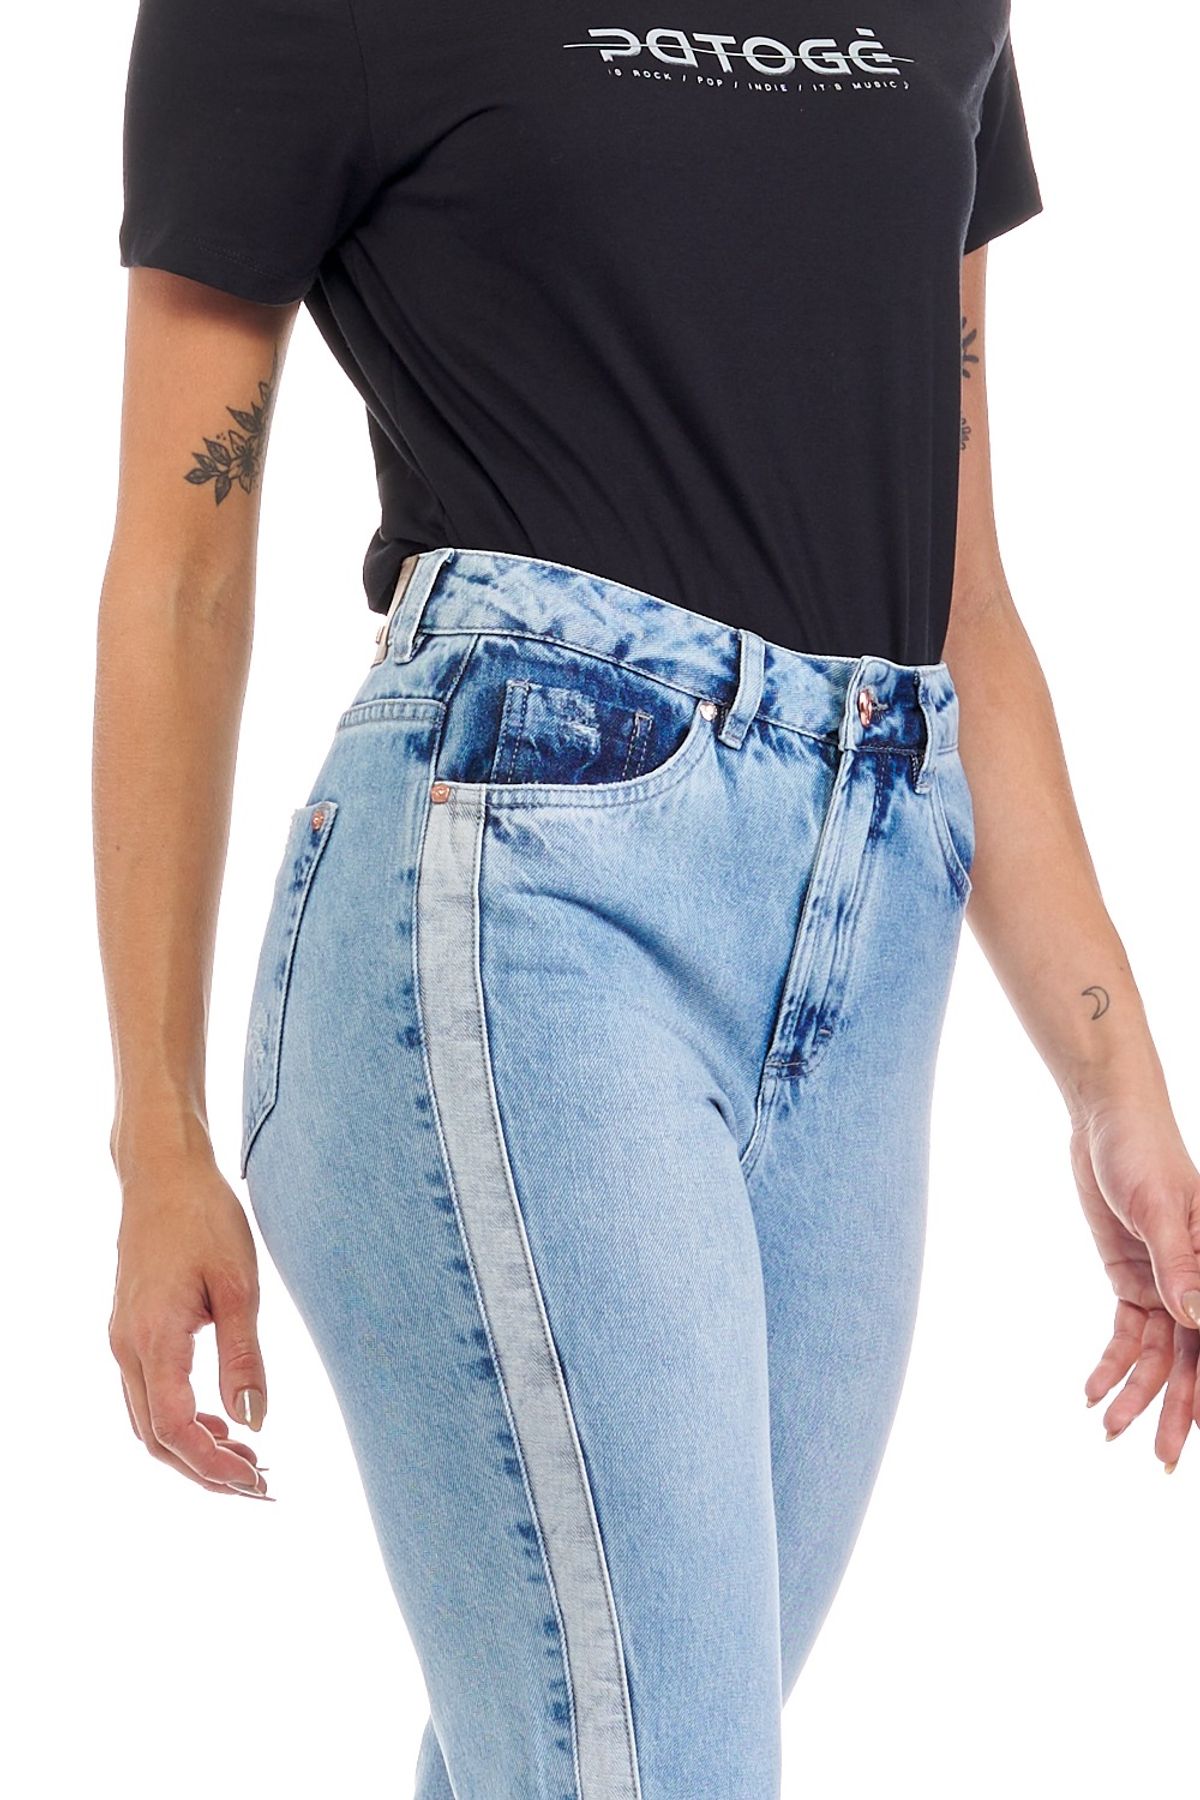 Calça Patogê feminina mom jeans cintura alta (G4) CL36722 - patoge